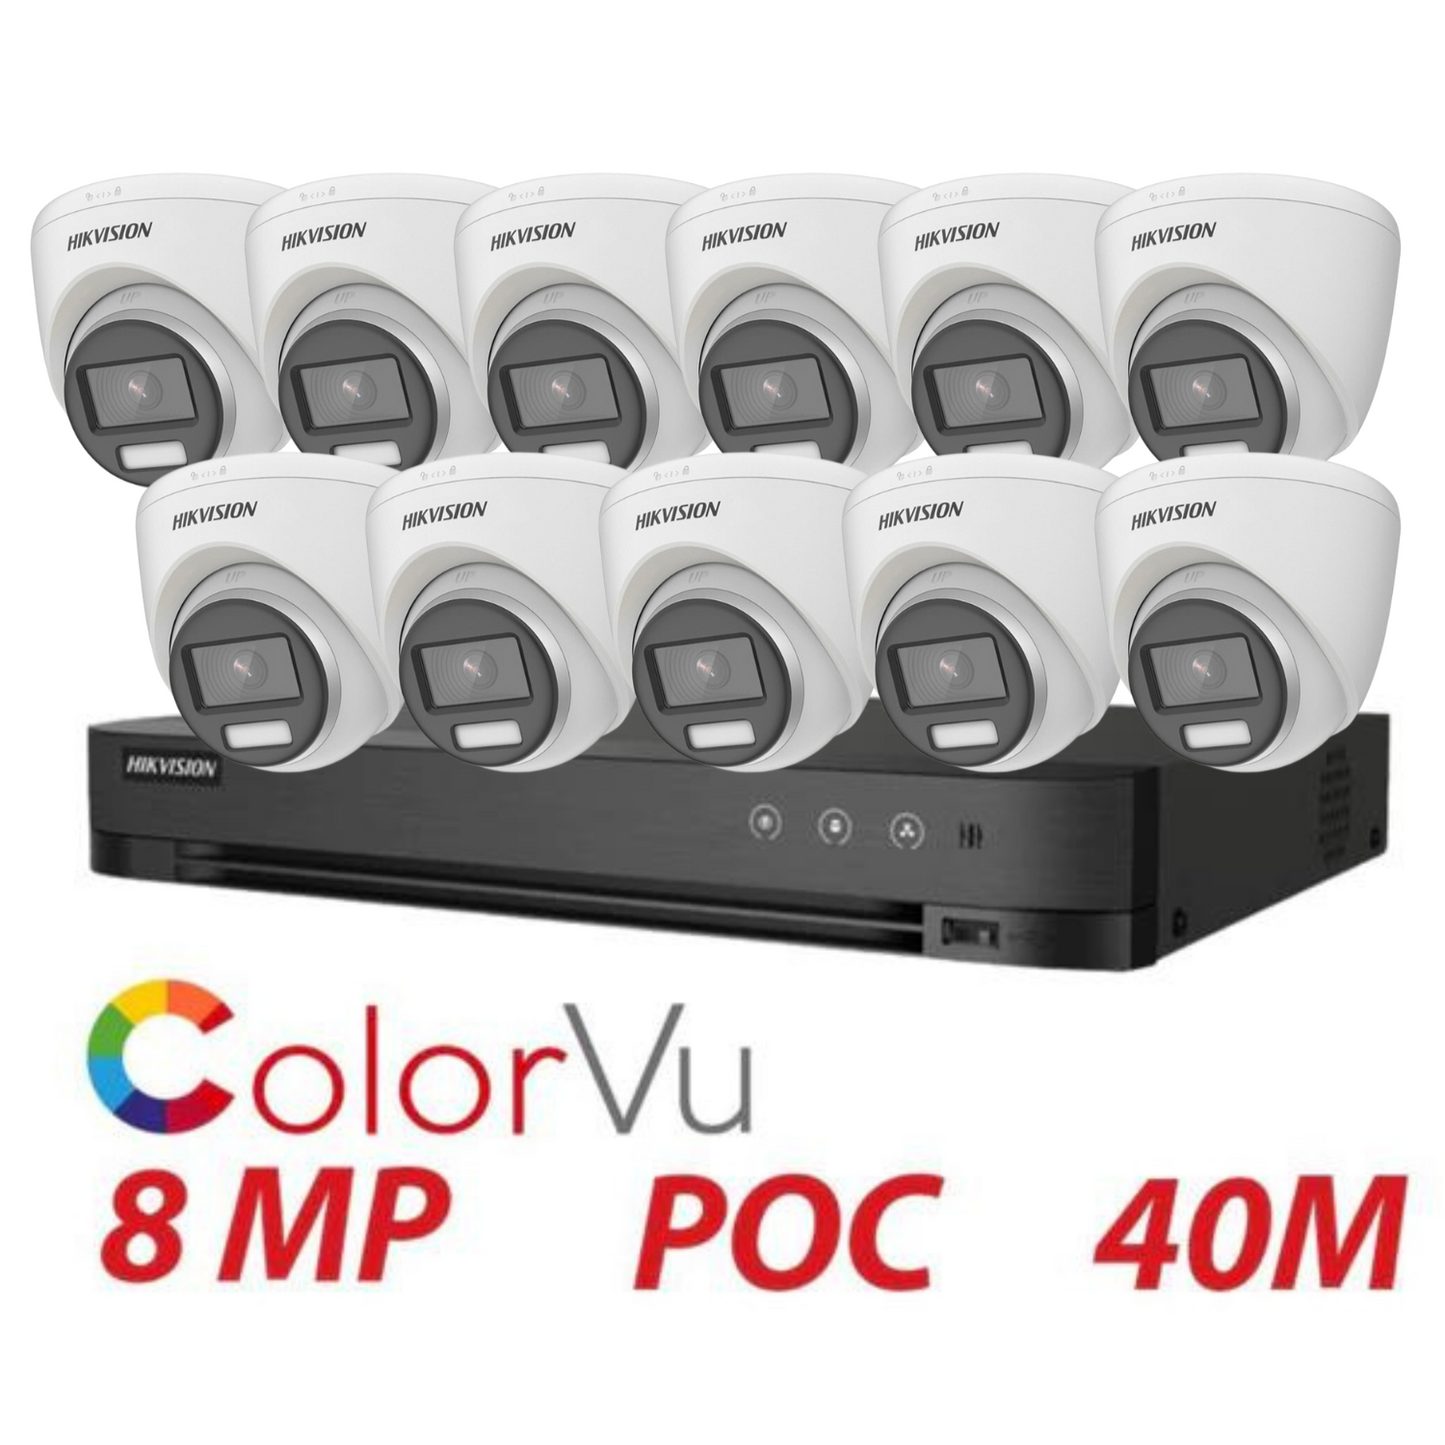 8MP 16CH Hikvision ColorVu System 11X 24HR Color POC DVR Camera Kit